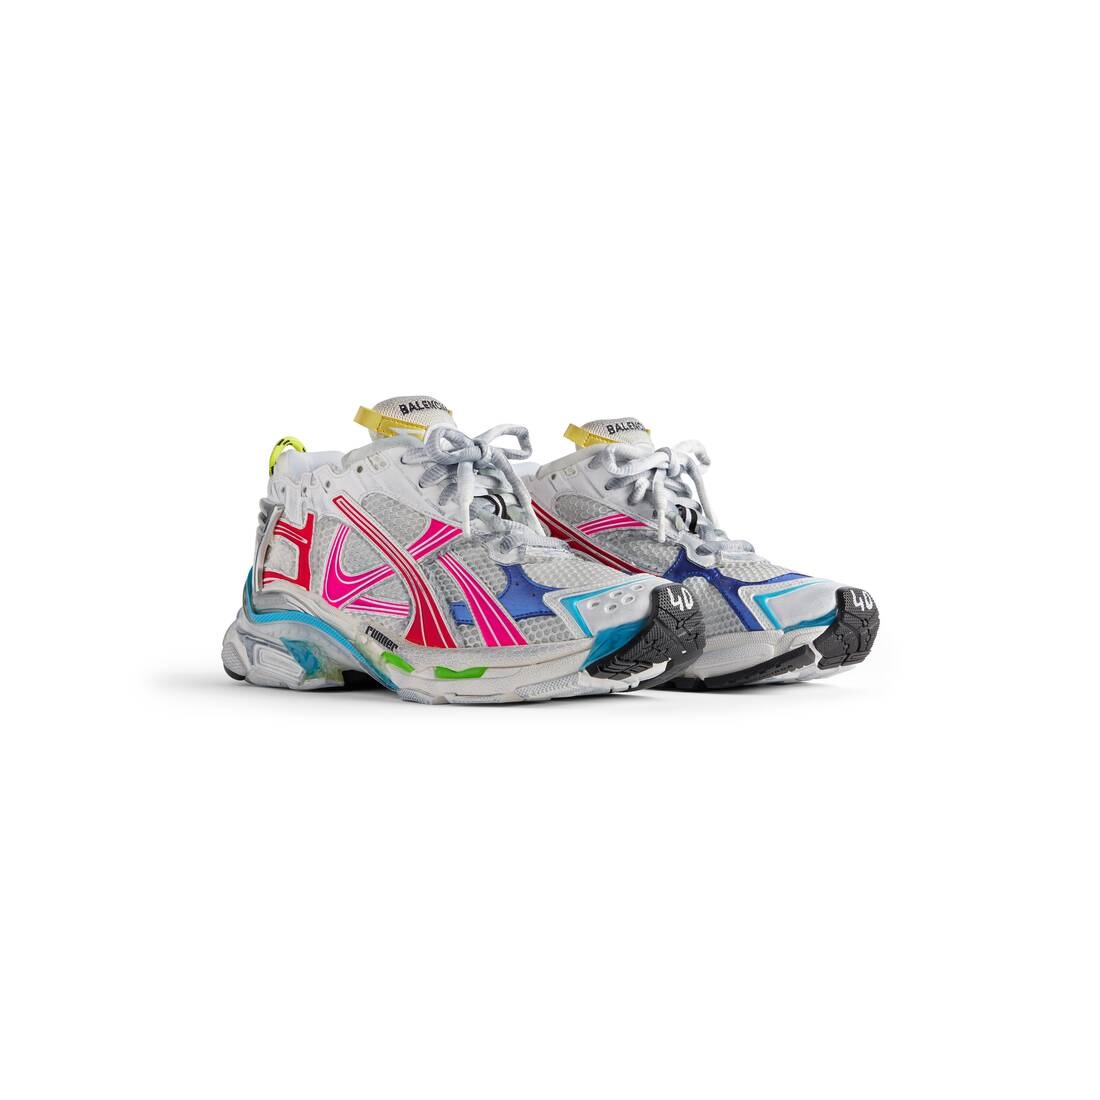 Women's Runner Sneaker in Multicolored - 2